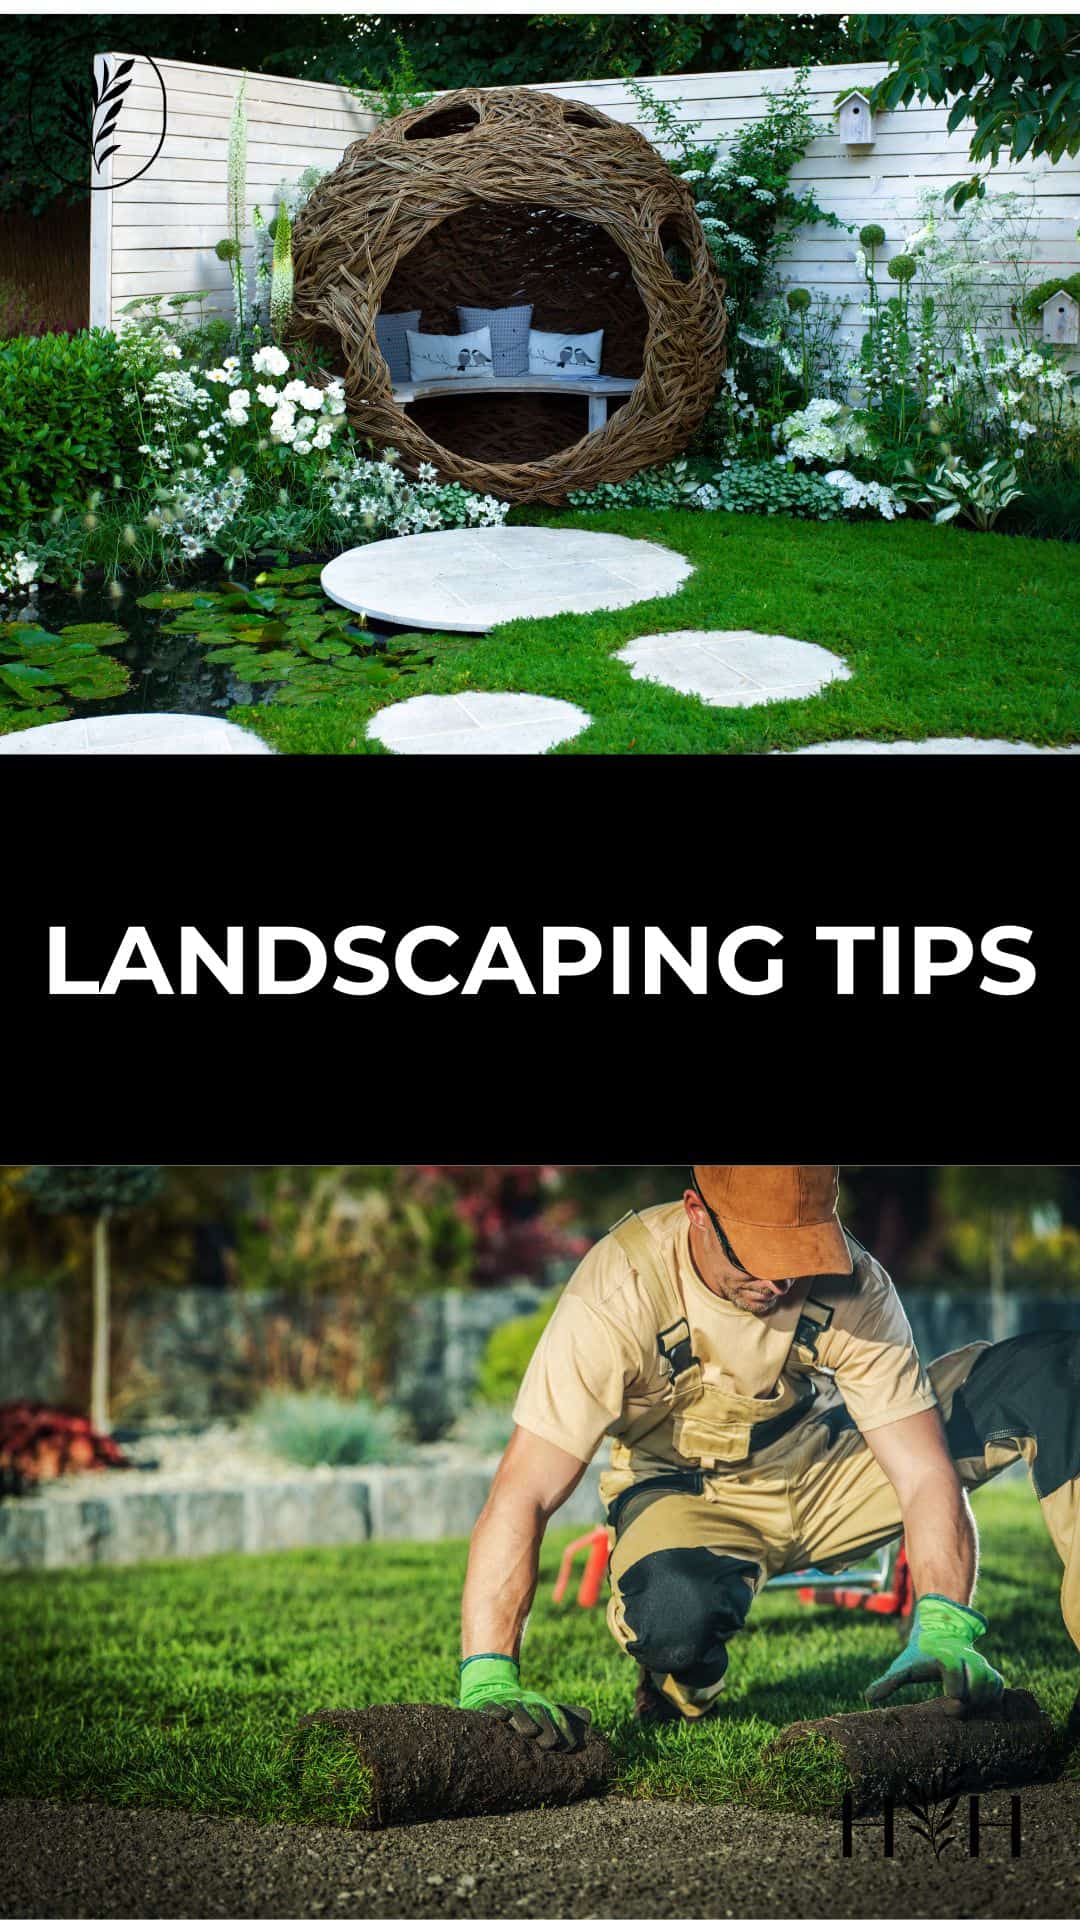 Landscaping tips via @home4theharvest